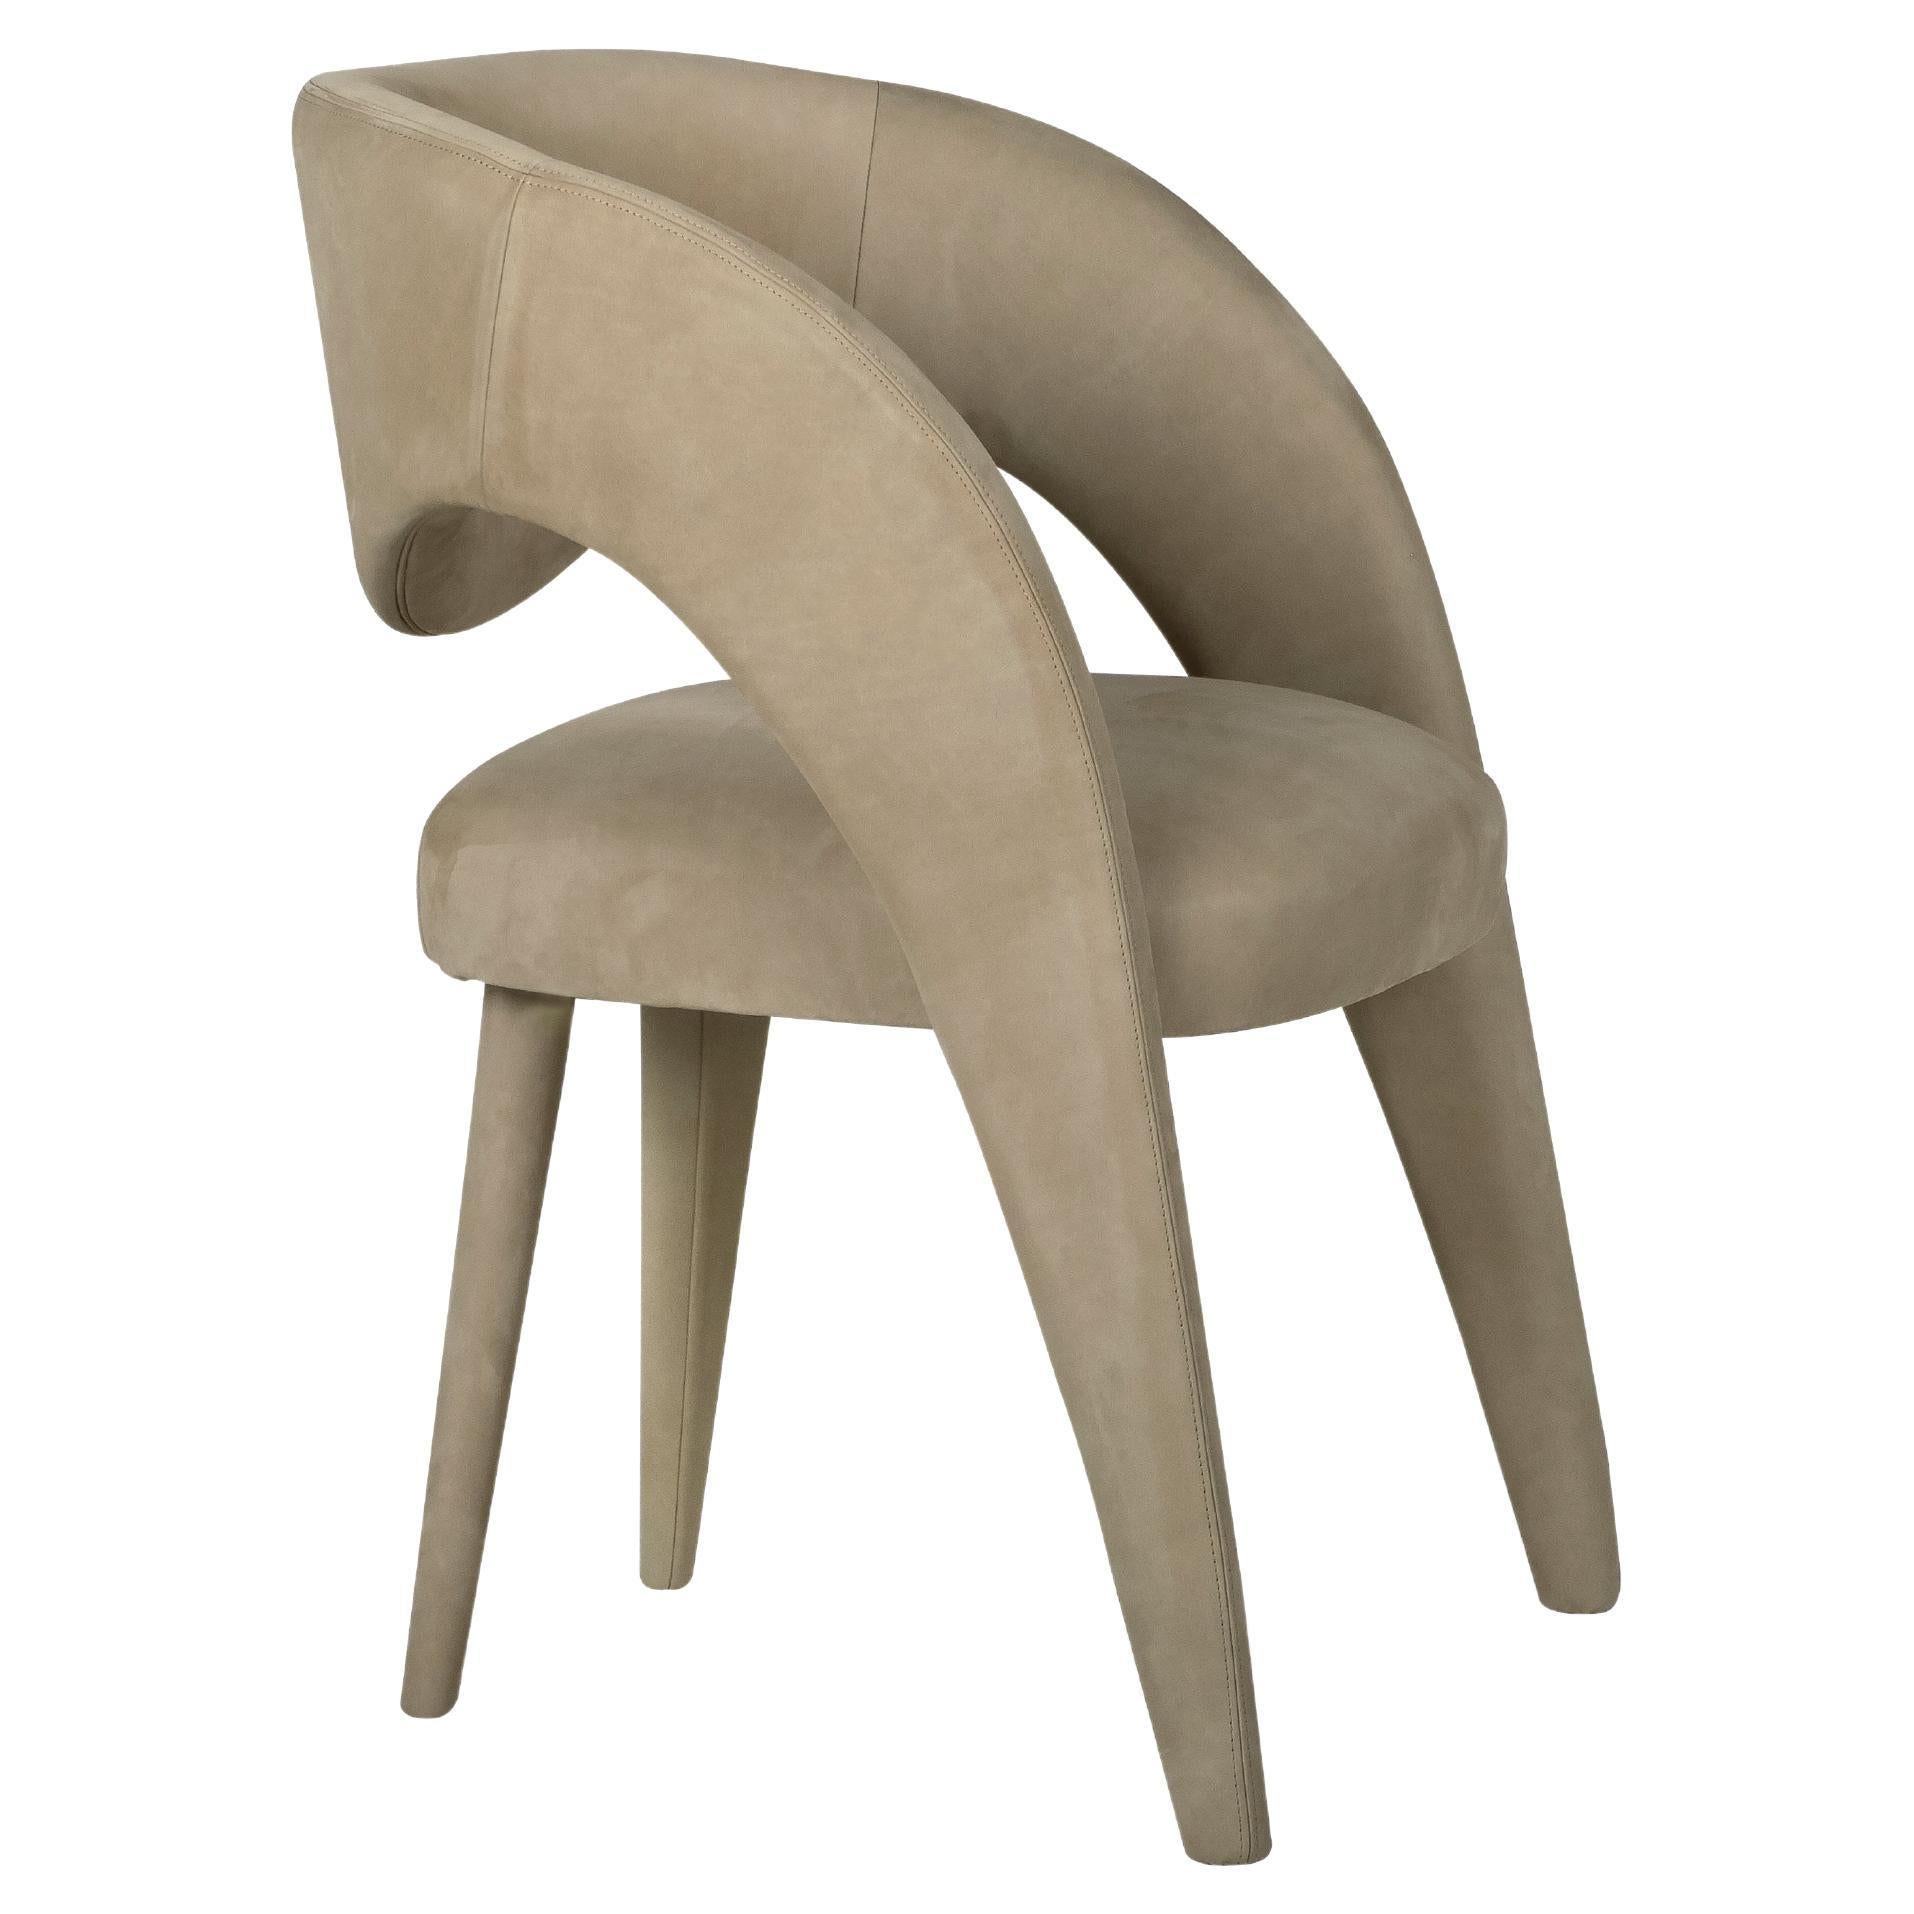 Greenapple Chair, Laurence Chair, Nubuck Leather, Handmade in Portugal